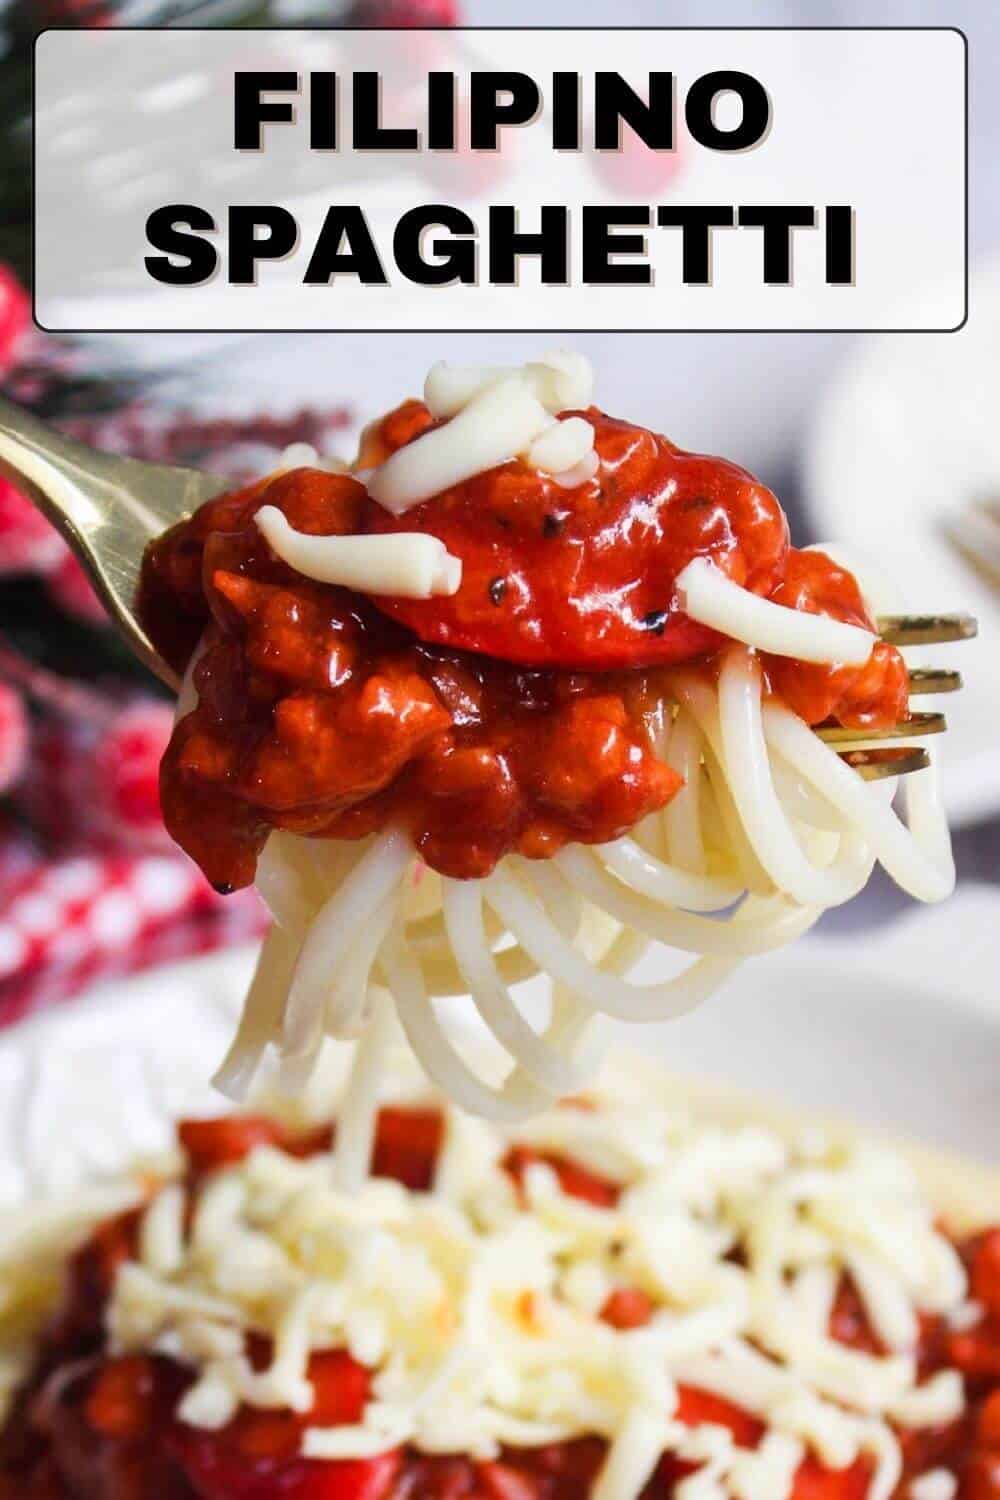 Filipino spaghetti on a fork.